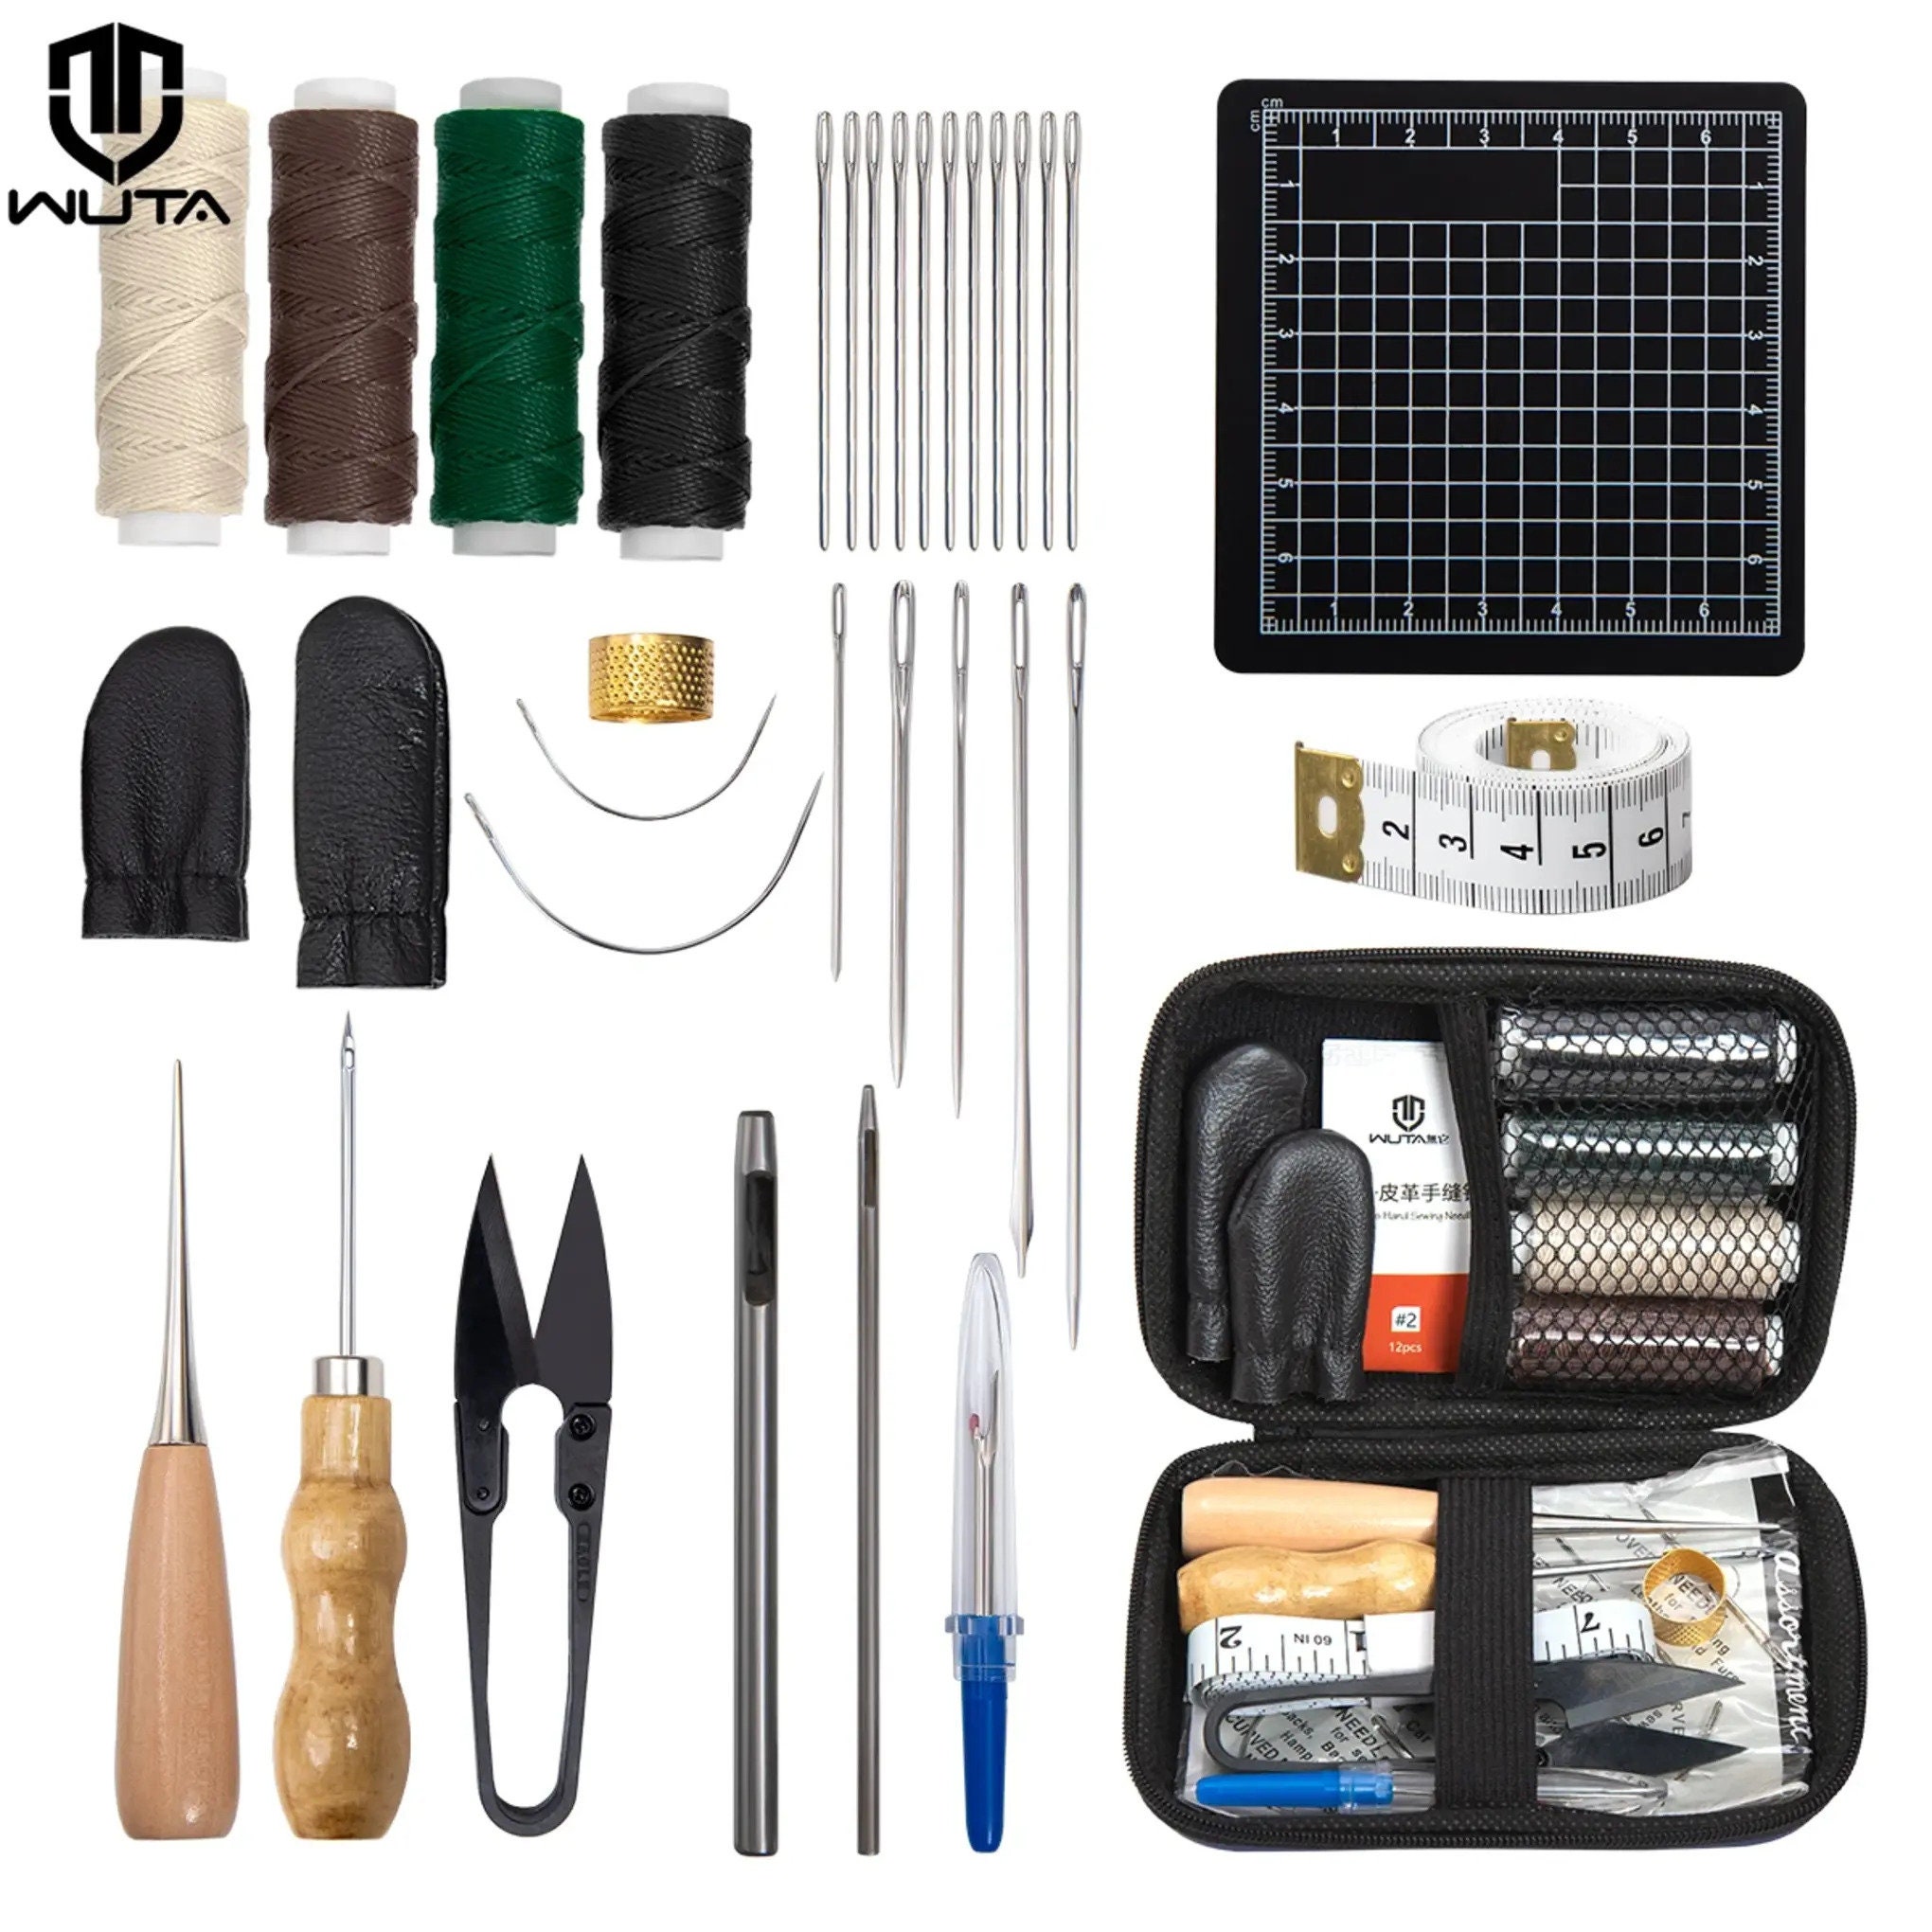 KRABALL-Kit de herramientas de artesanía de cuero profesional, Kit